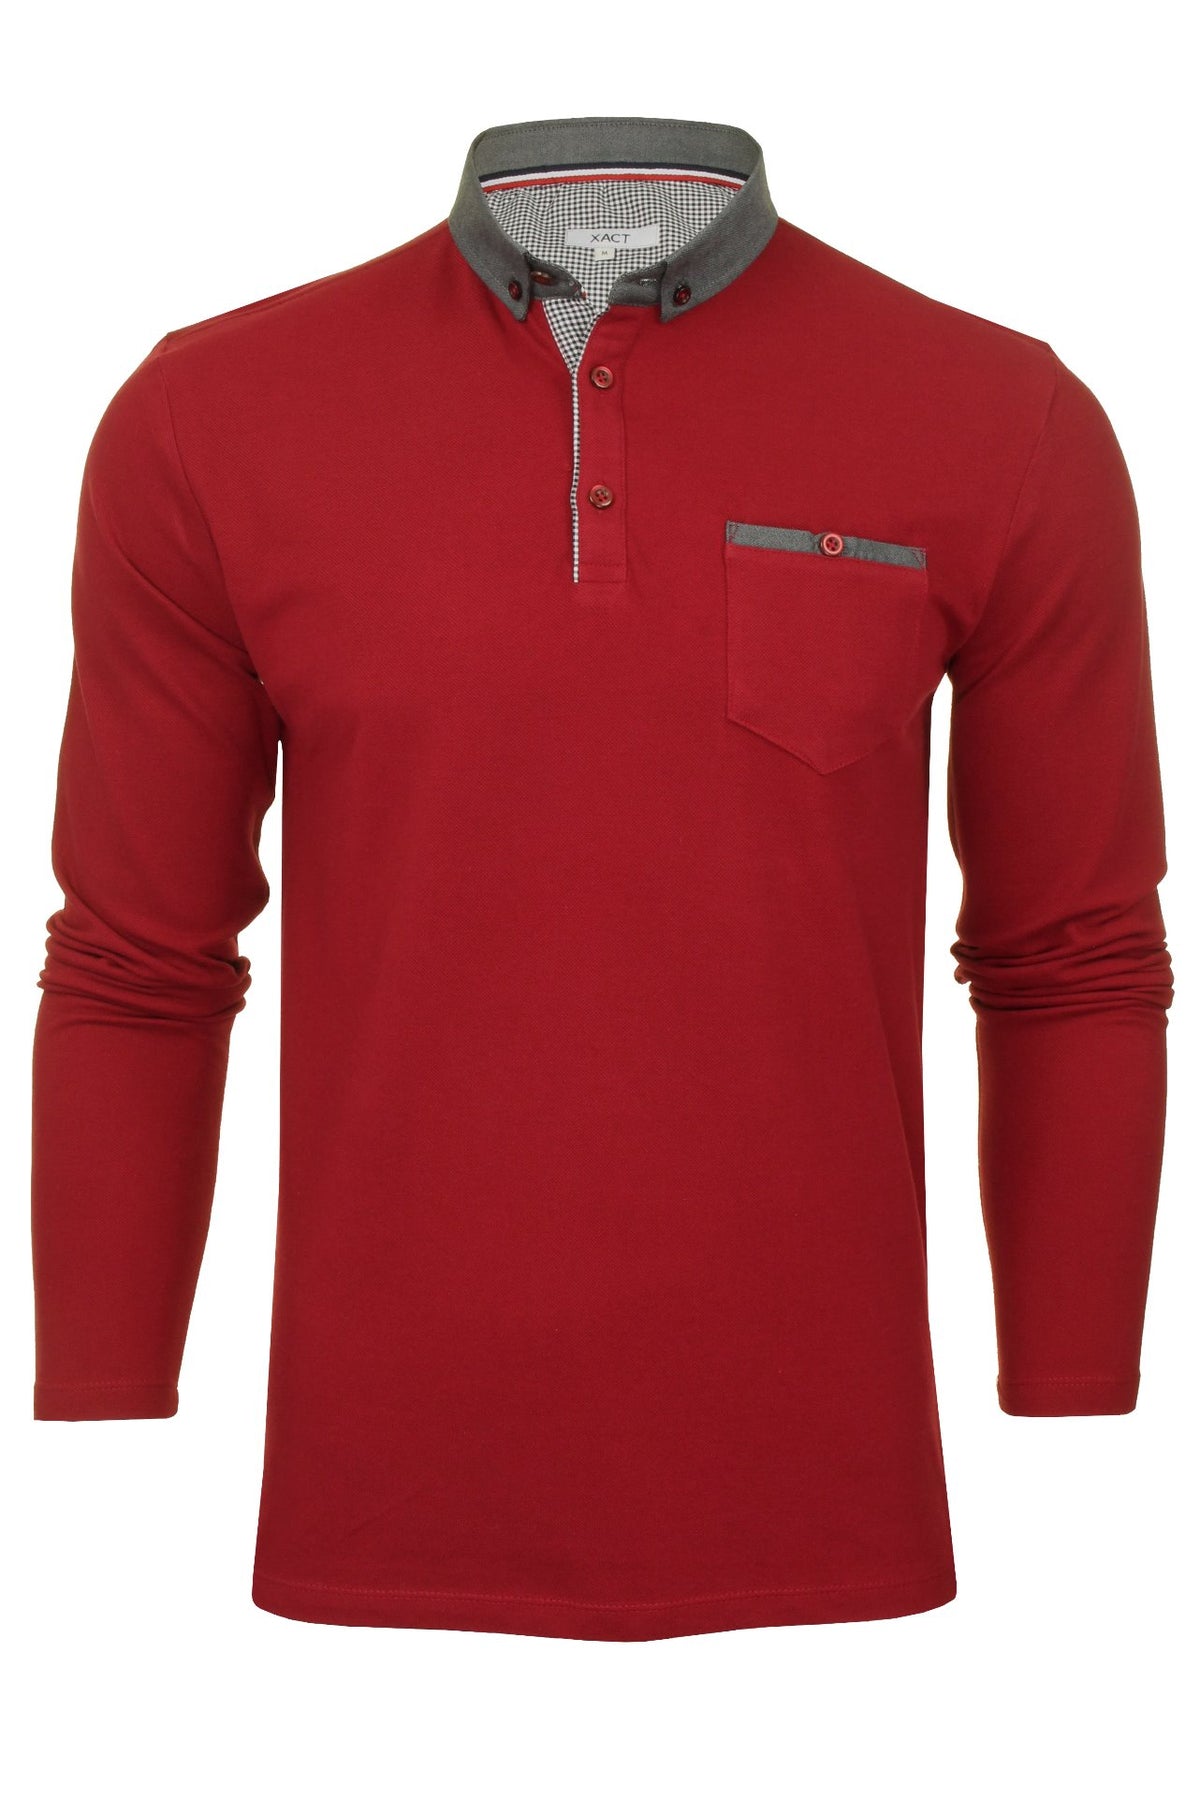 Mens Long Sleeved Button Down Collar Polo T-Shirt by Xact, 01, Xp1026, Burgundy